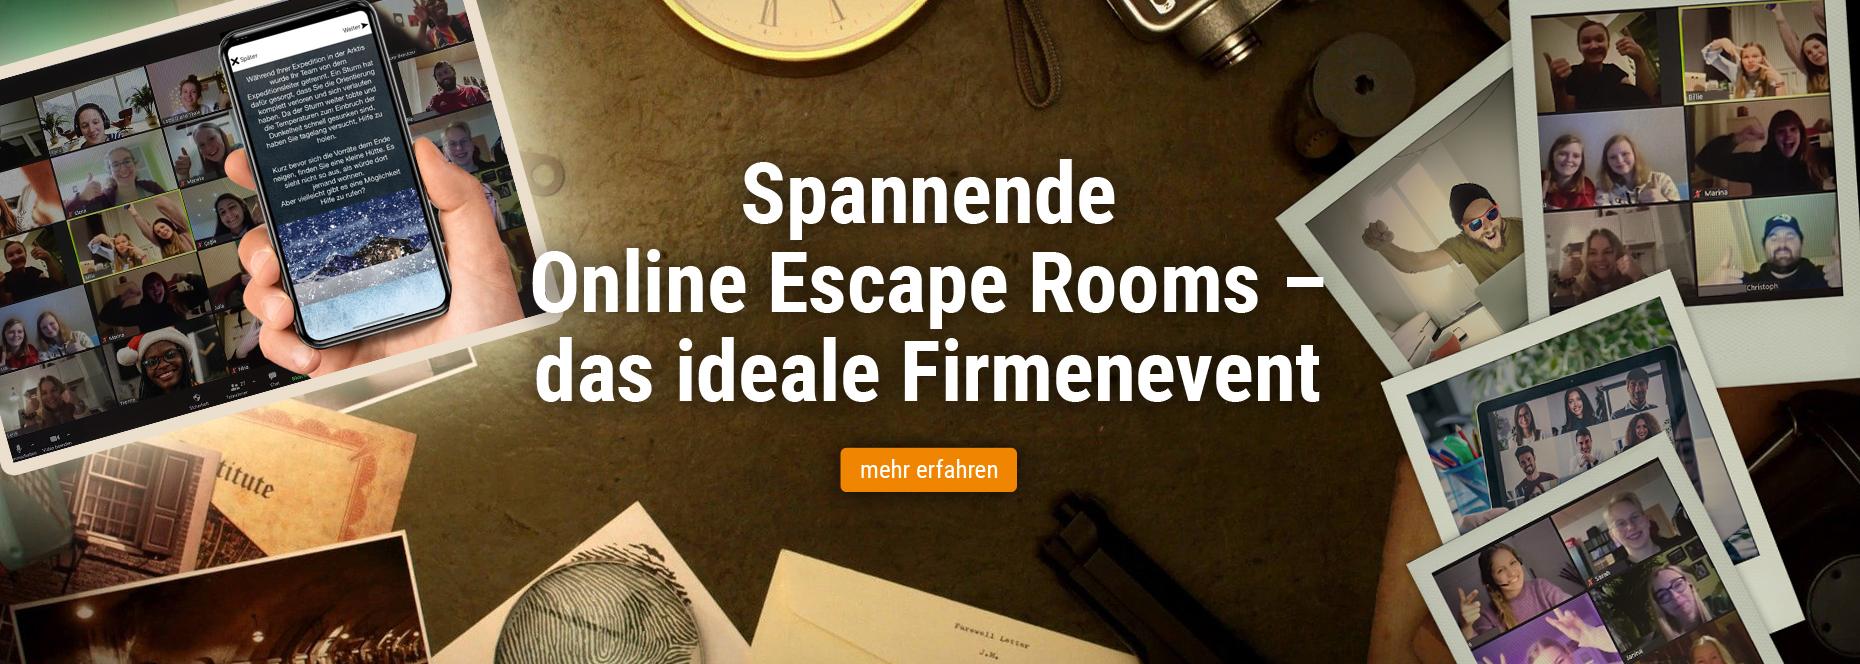 Online Escape Room als Firmenevent buchen